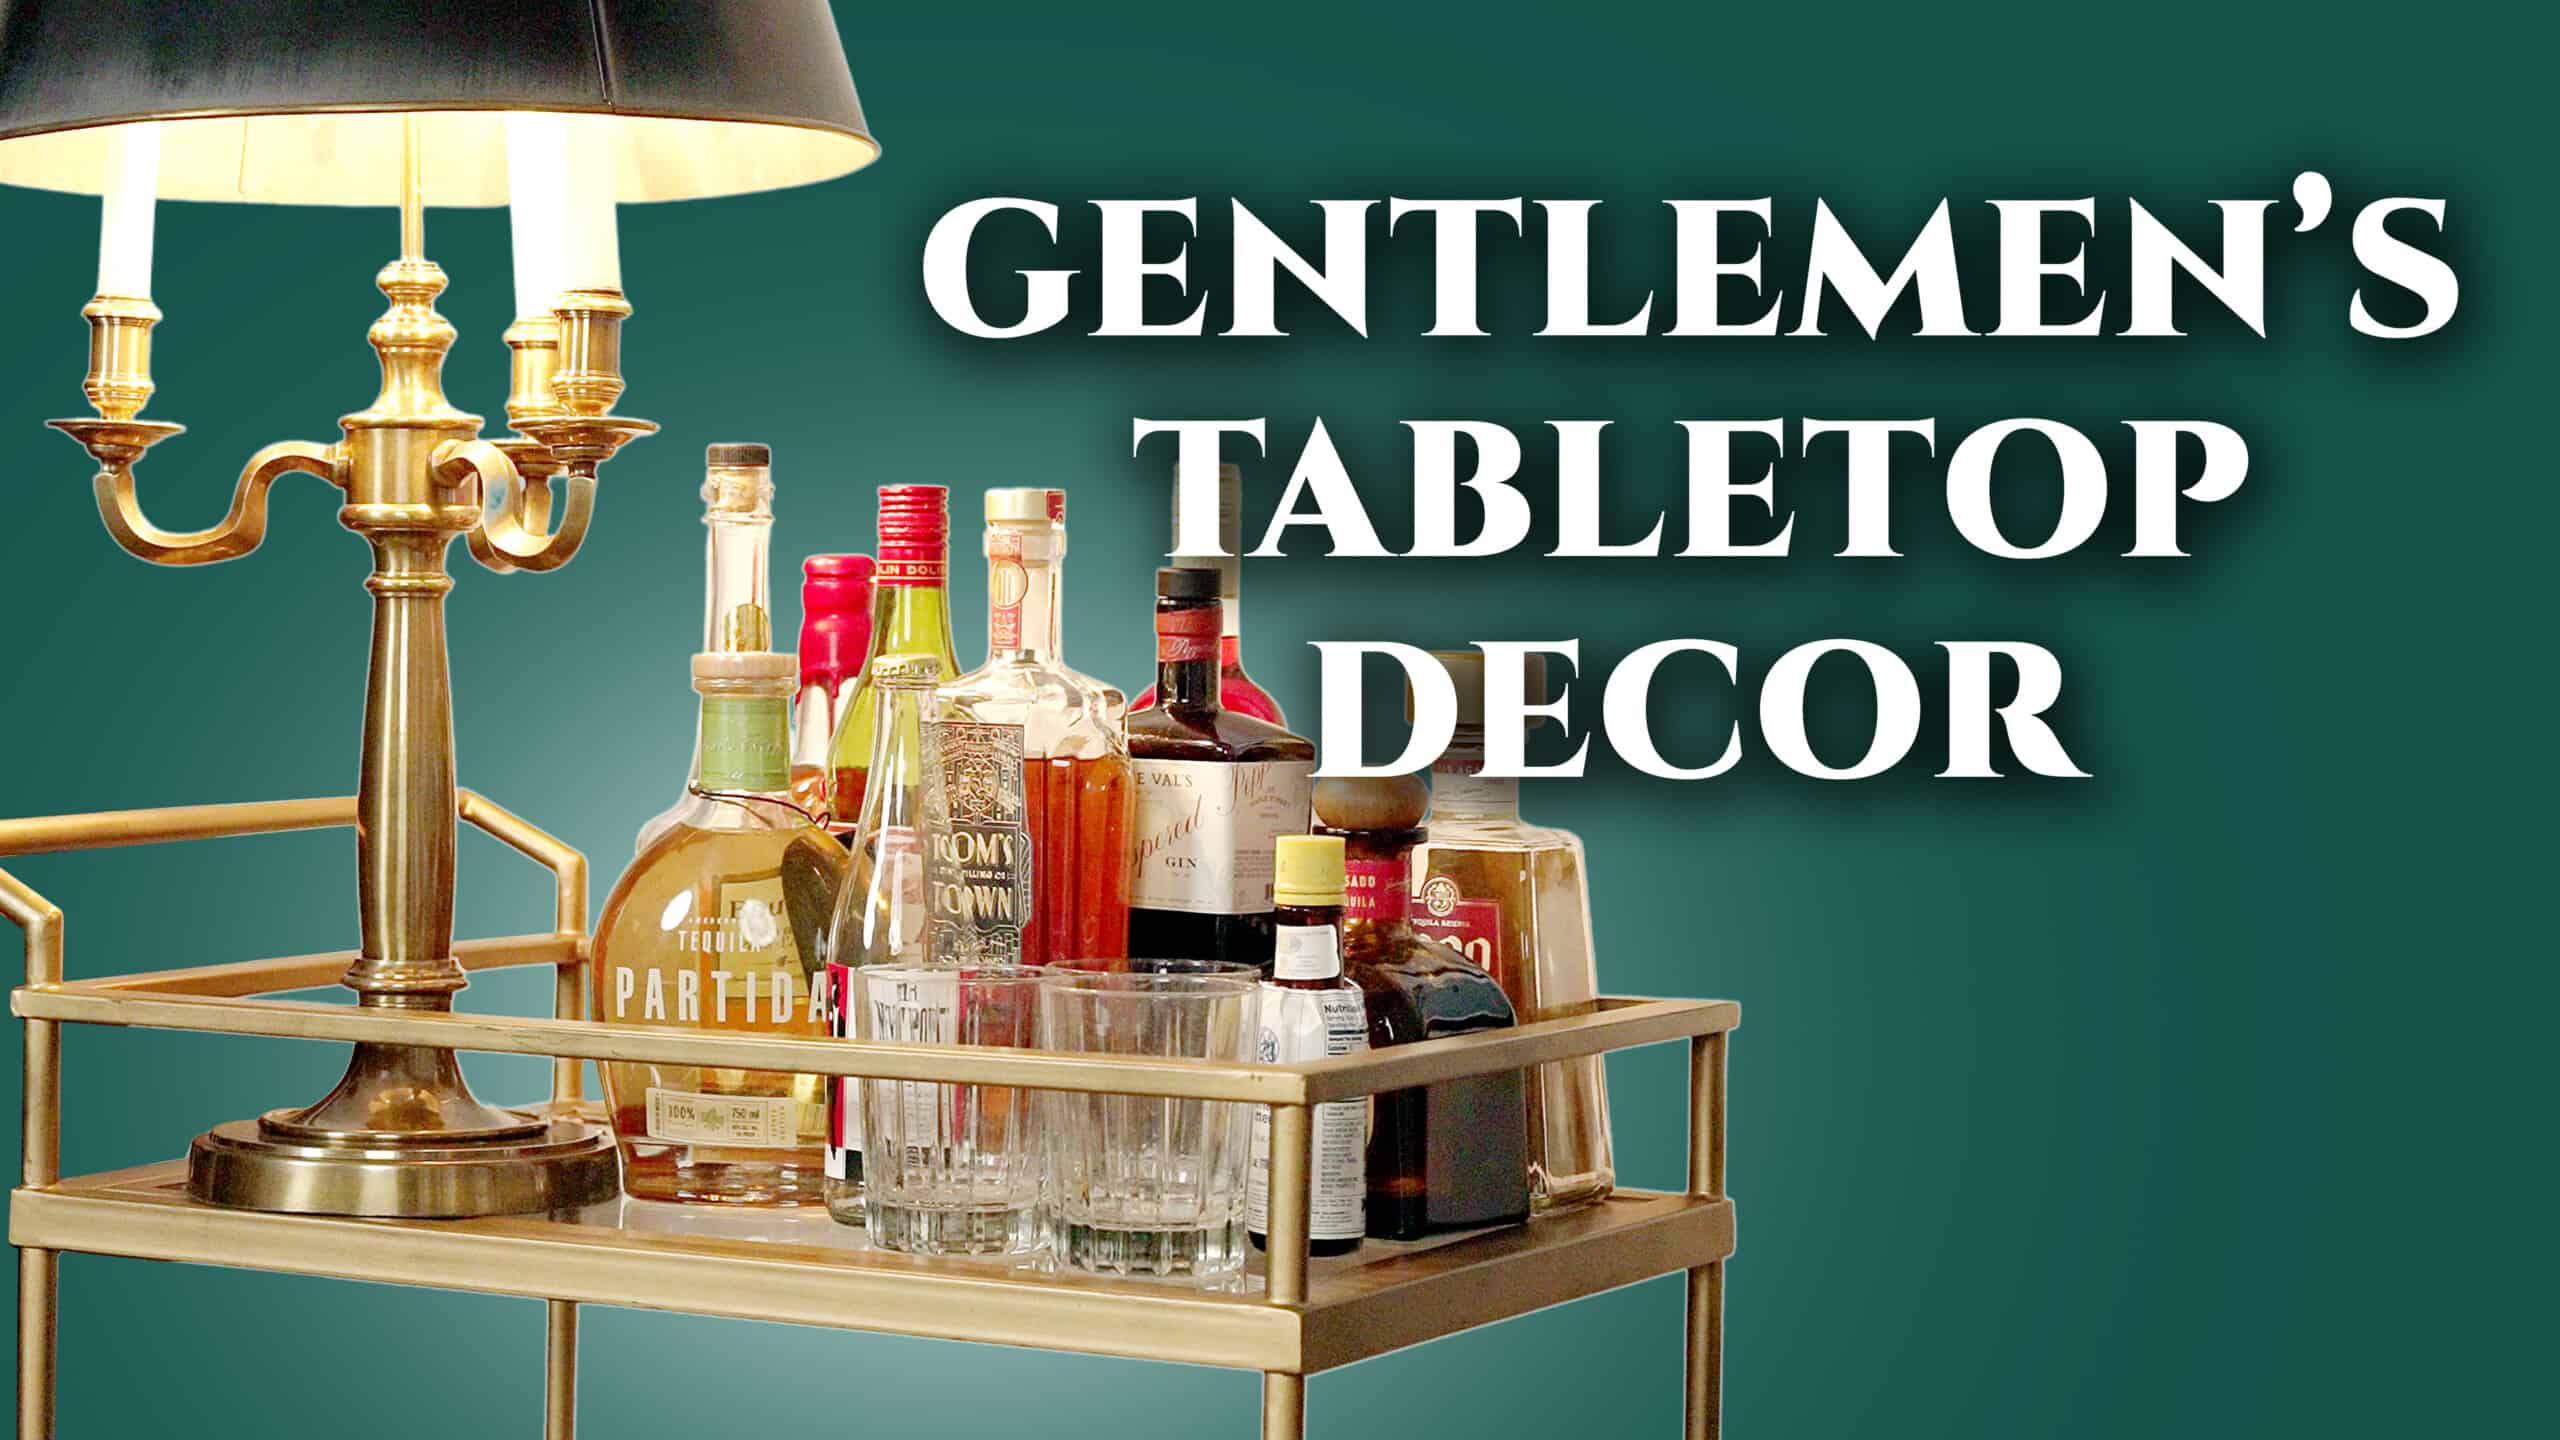 https://www.gentlemansgazette.com/wp-content/uploads/2022/02/gentlemens-tabletop-decor_3840x2160-scaled.jpg